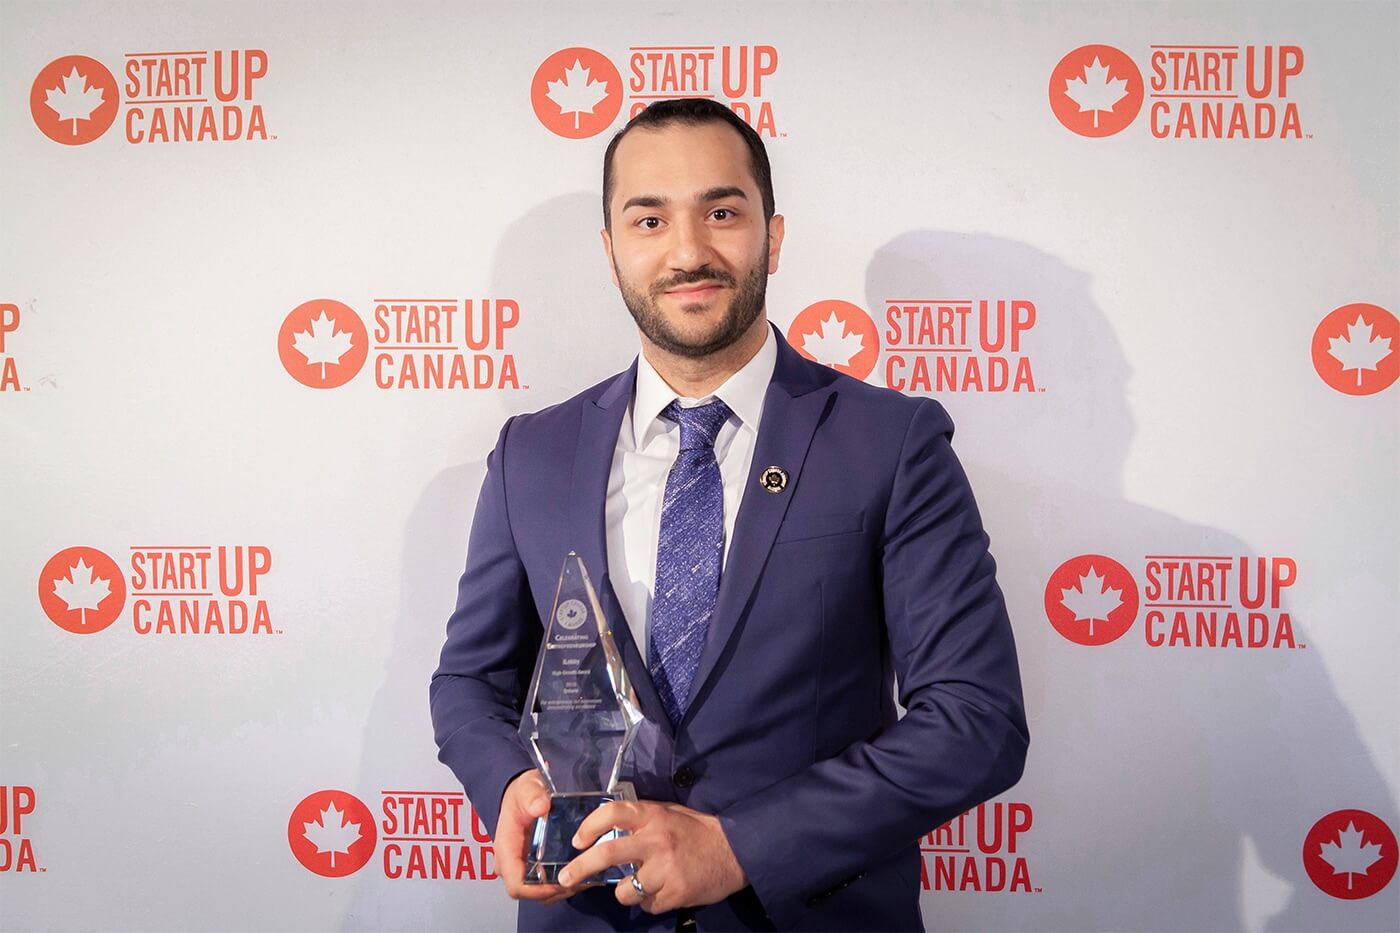 iLobby Corp. Wins Ontario Region High-Growth Entrepreneurship Award Presented by Startup Canada